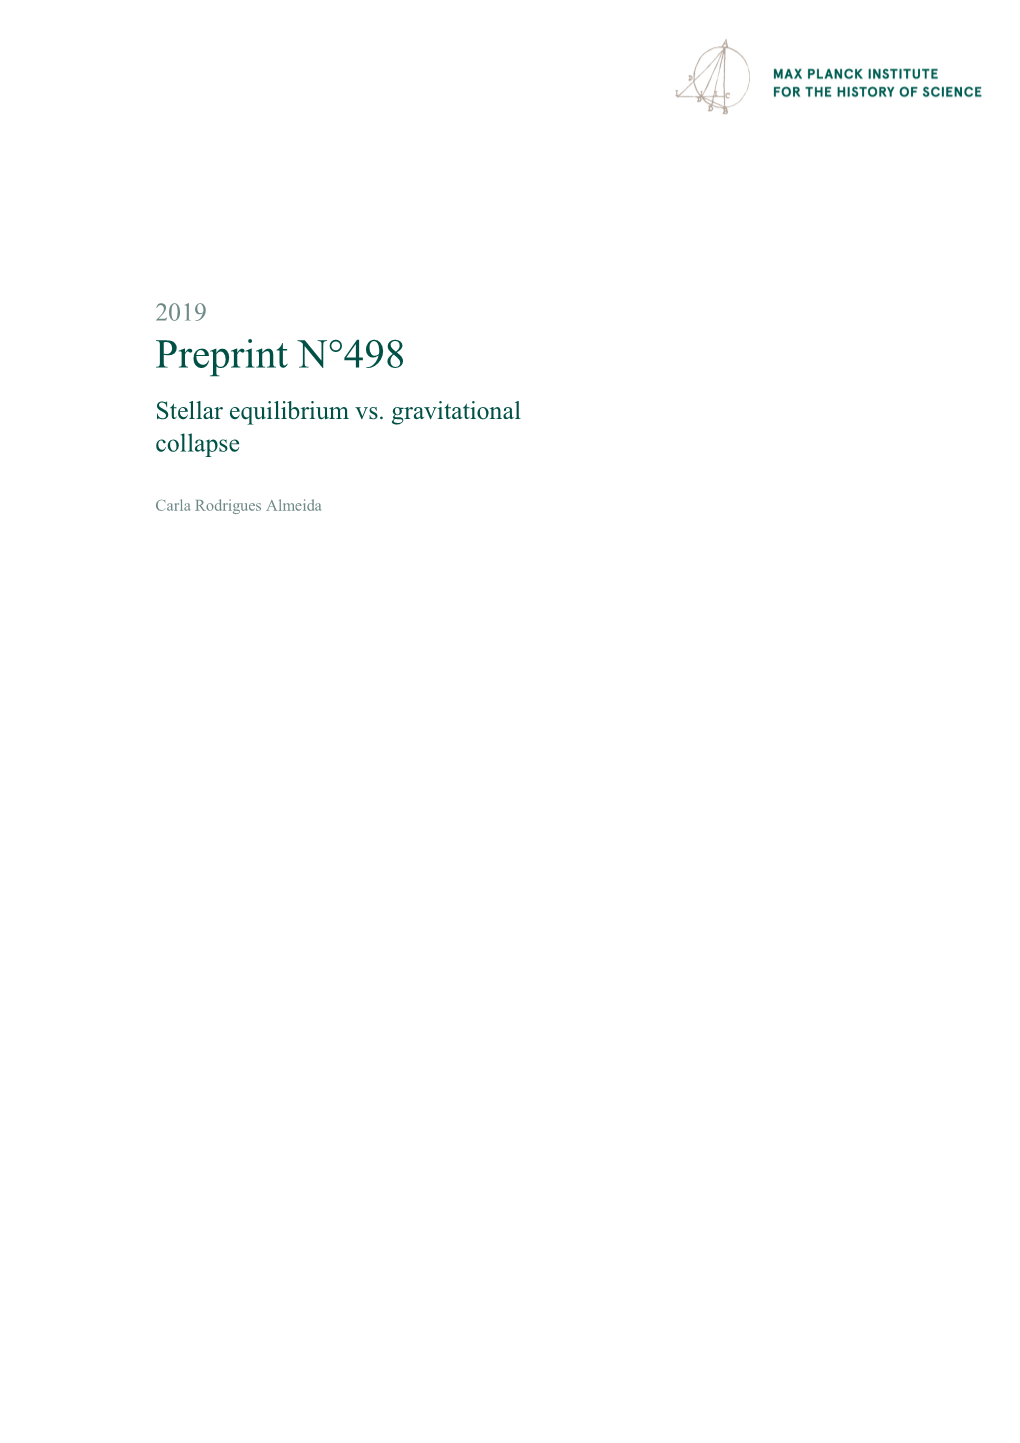 Preprint N°498